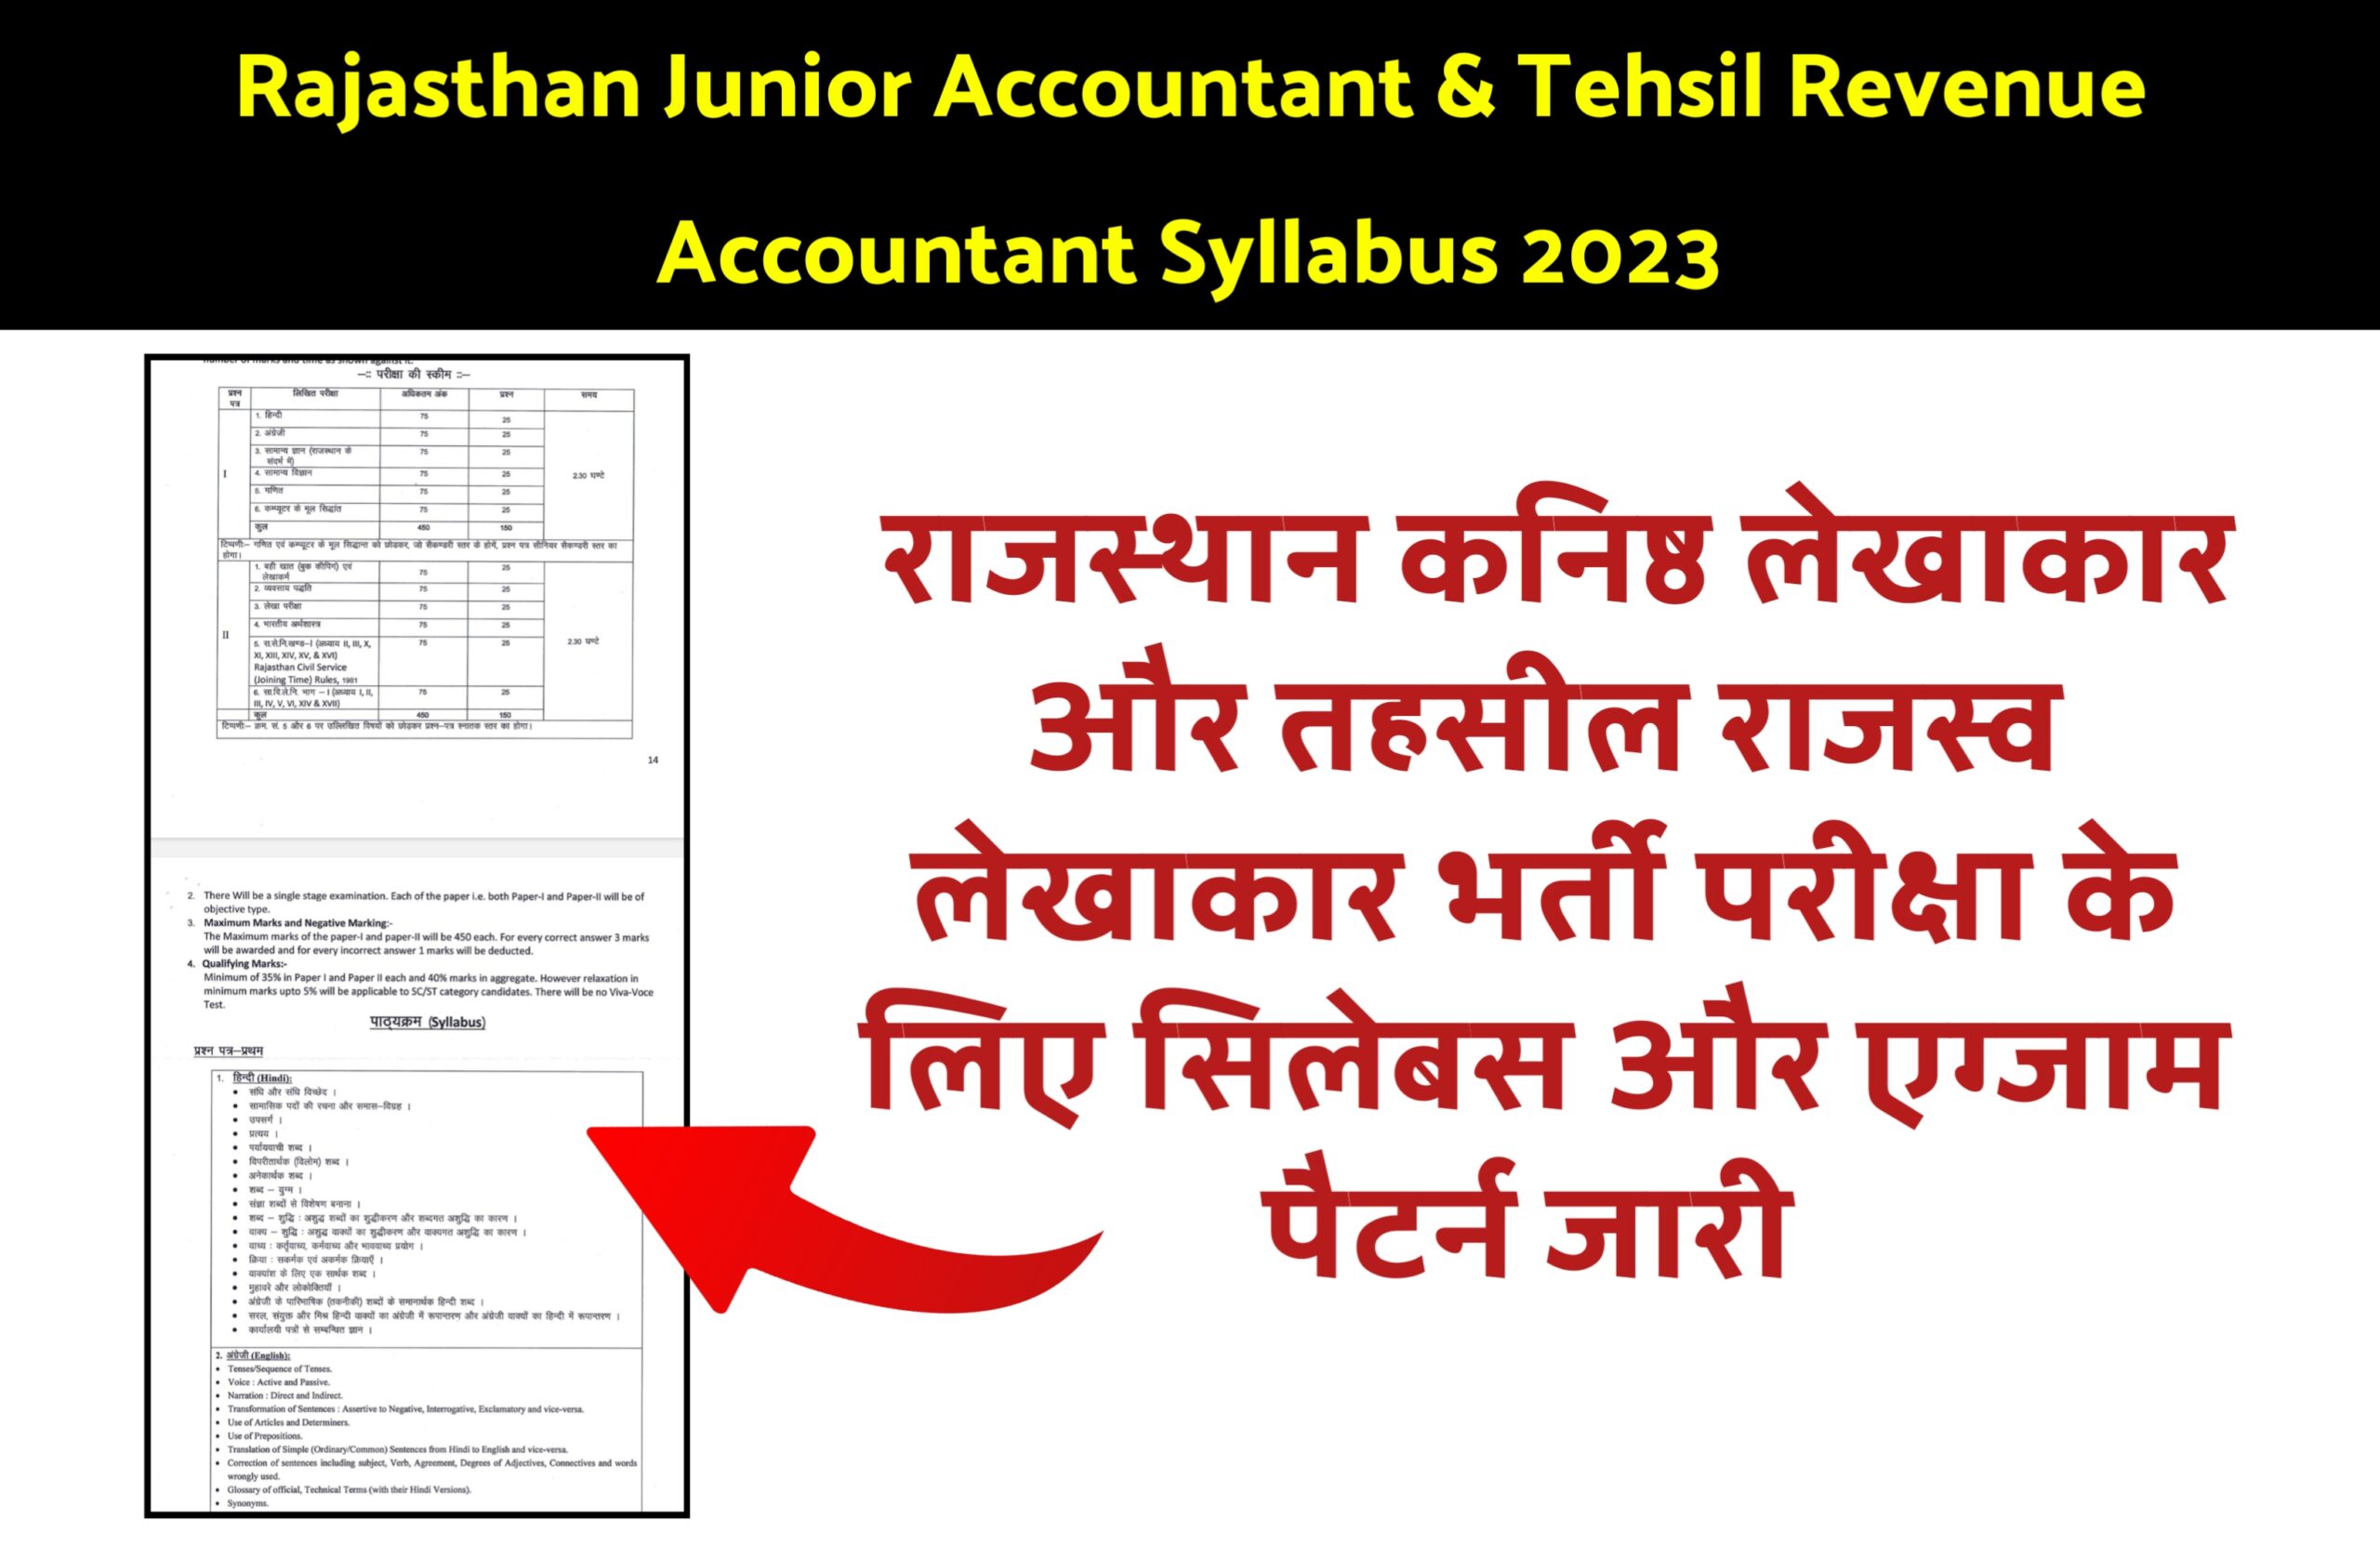 Rajasthan Junior Accountant & Tehsil Revenue Accountant Syllabus 2023